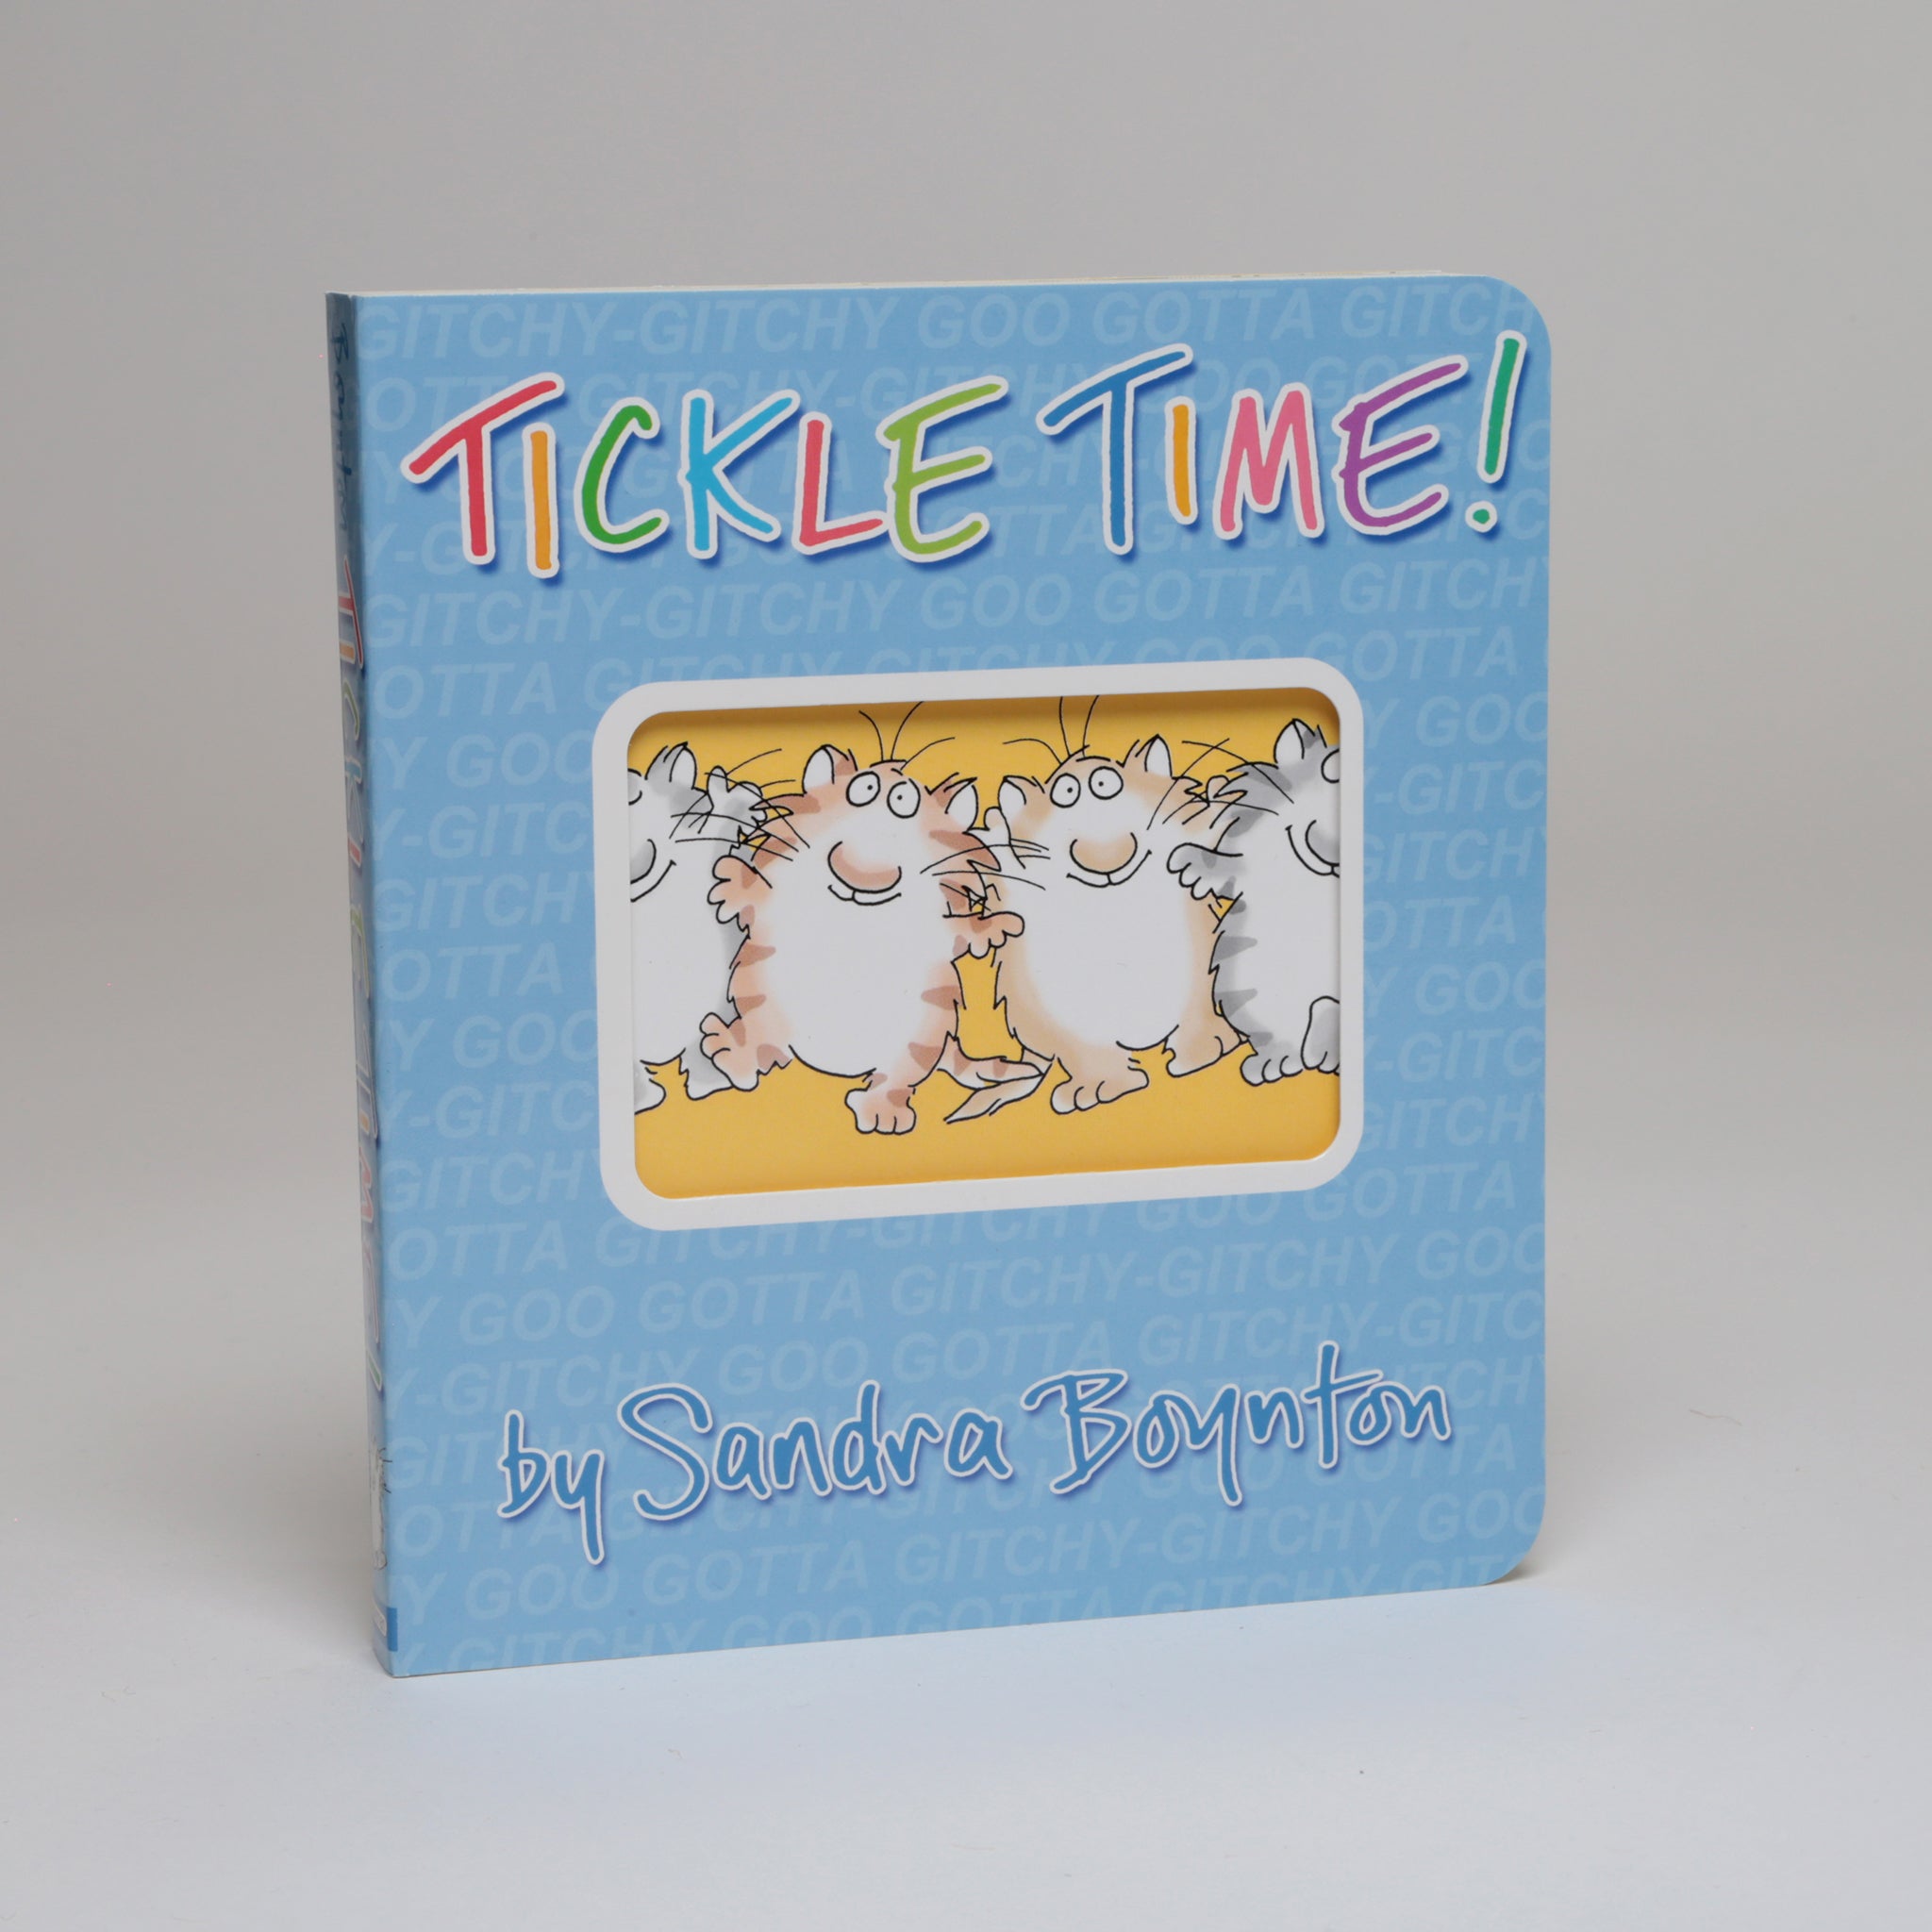 Tickle Time!, by Sandra Boynton